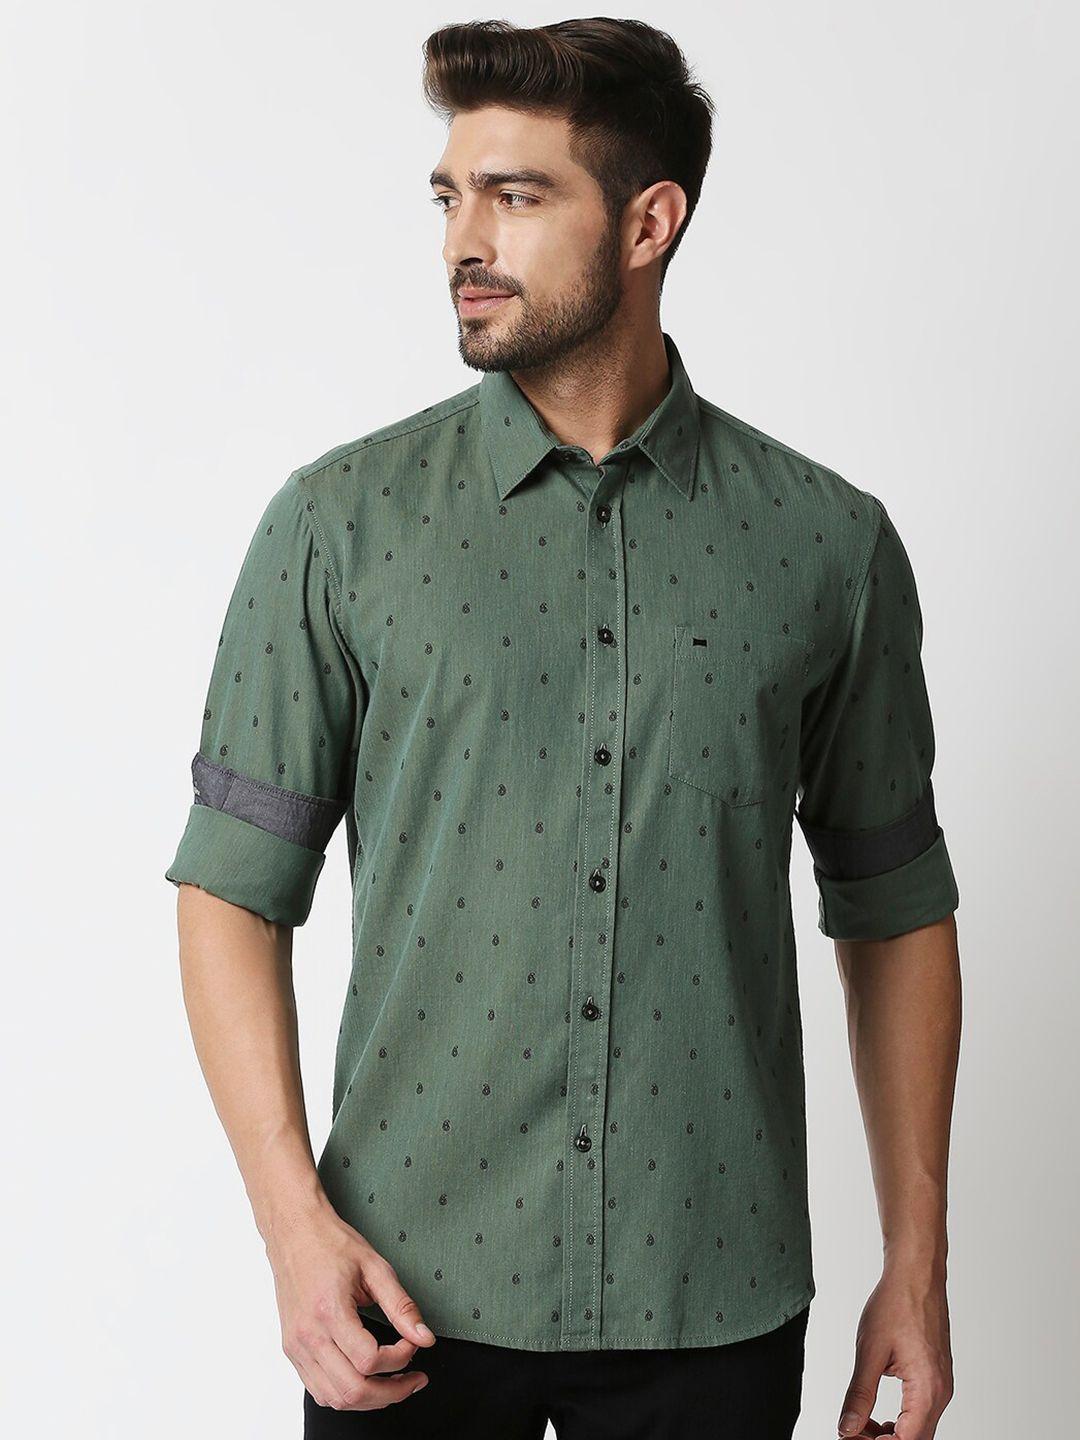 basics-men-olive-green-&-black-slim-fit-ditsy-paisley-print-cotton-casual-shirt